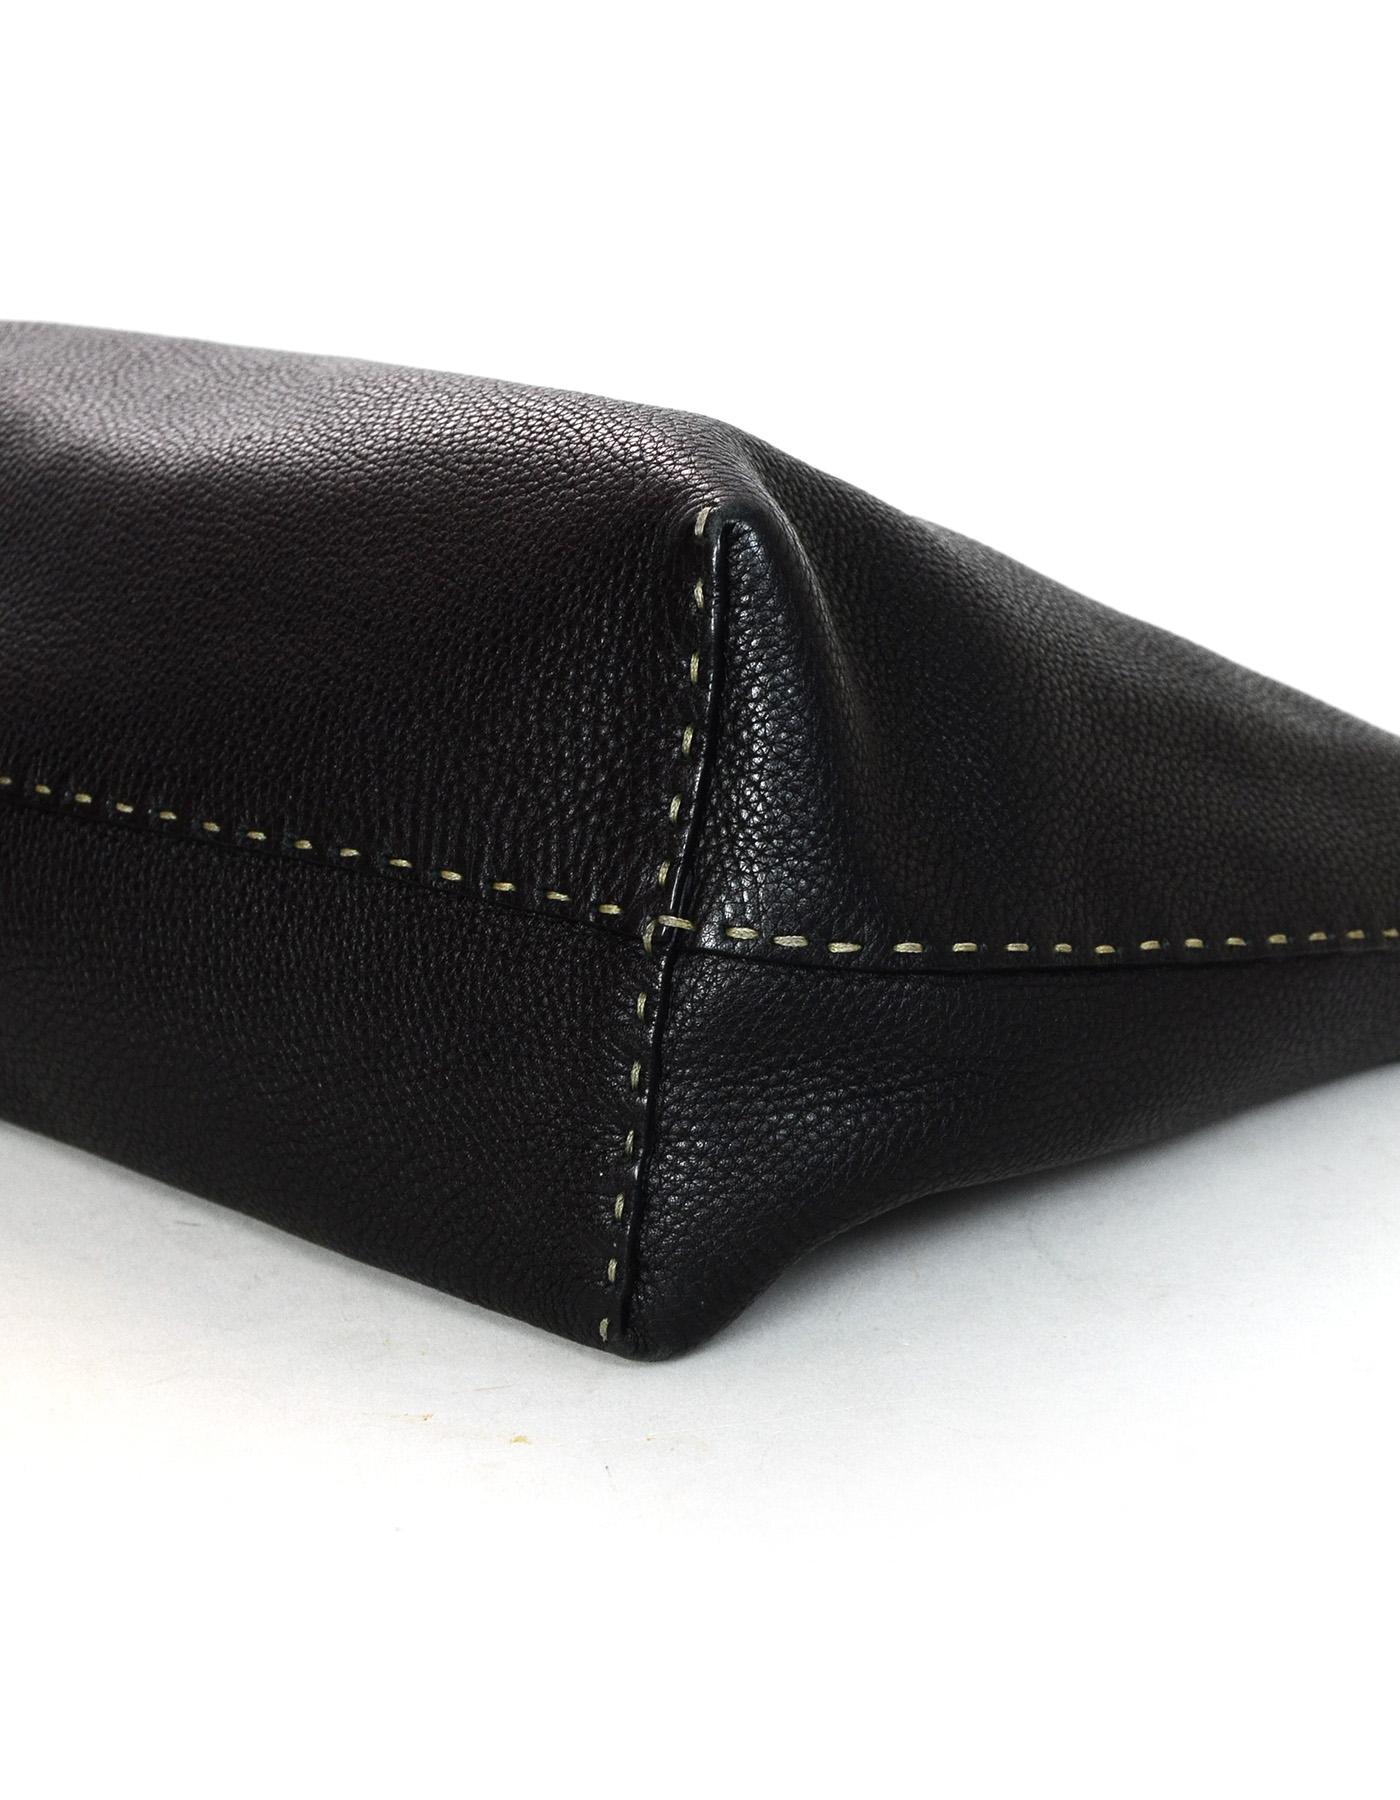 Women's Fendi Black Pebbled Leather Selleria Tote Bag w/ Contrast Stitching